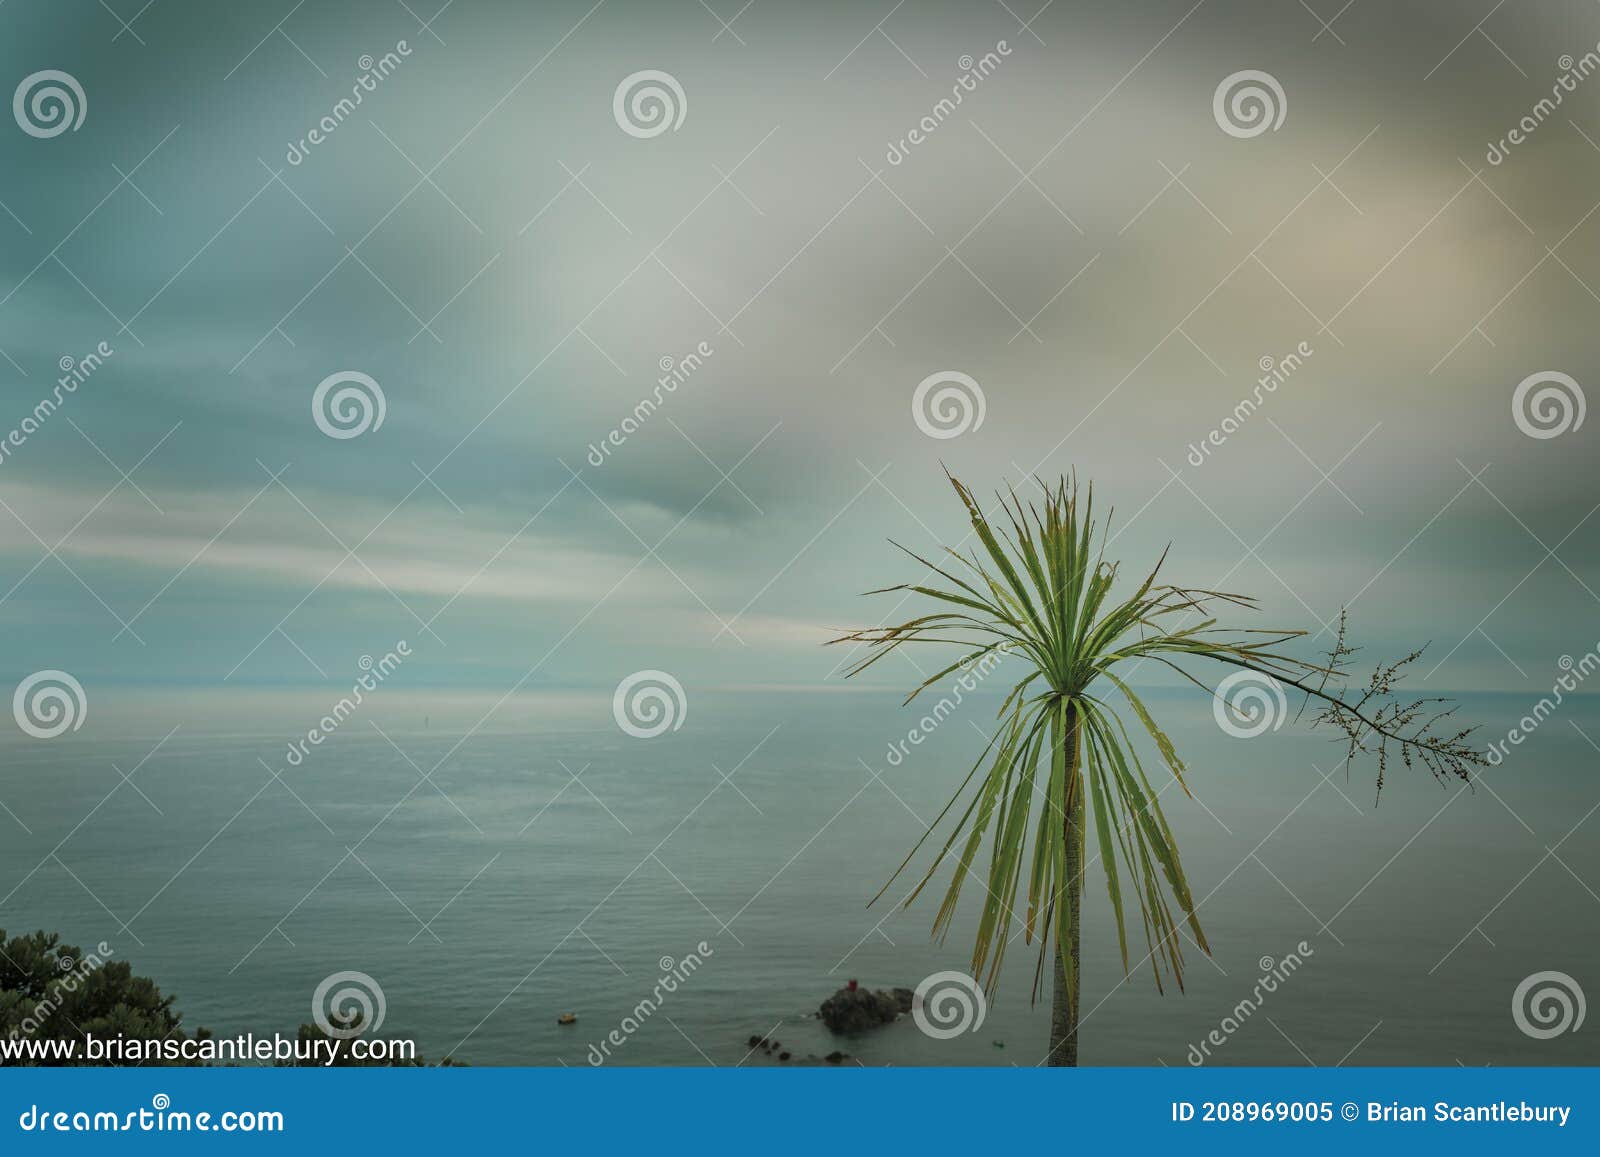 sea and horizon and tatty cabbage tree